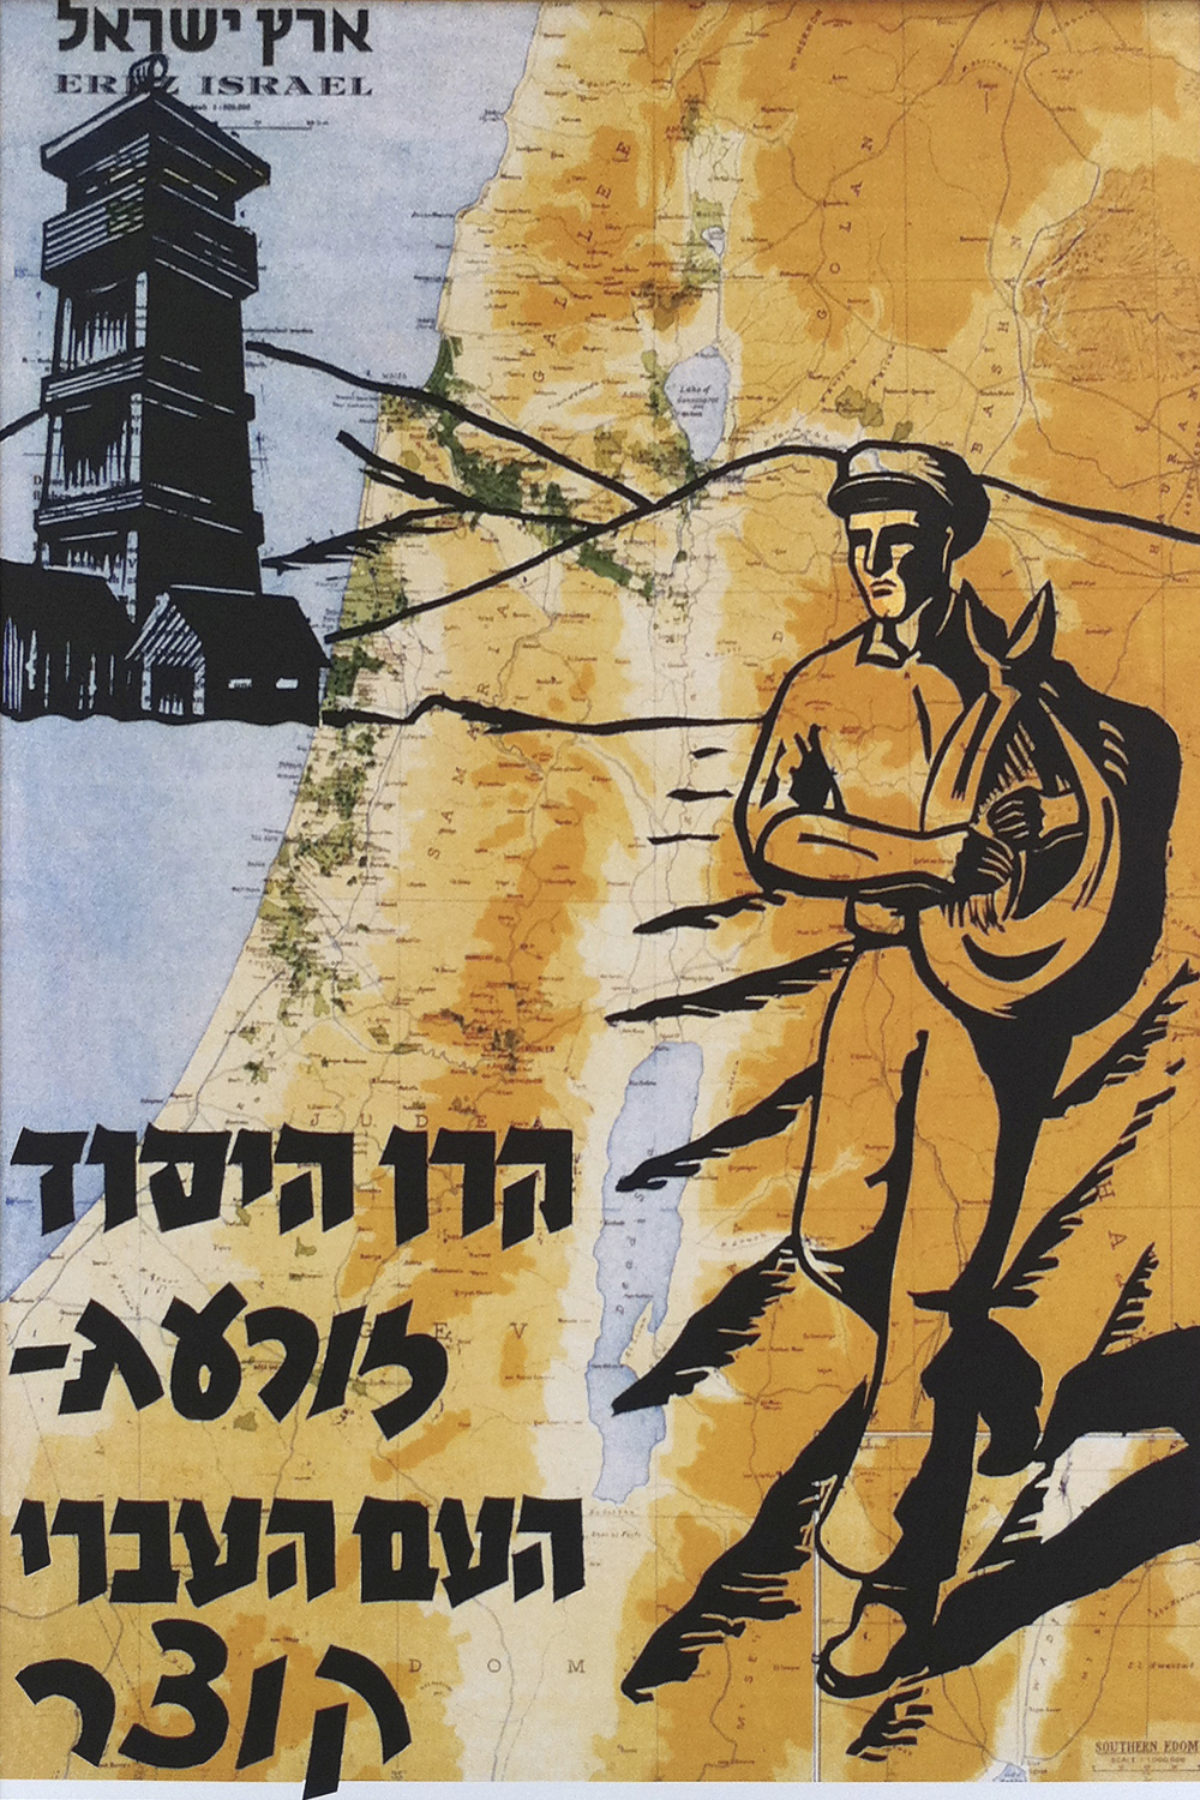 1938-united-israel-appeal-poster-by-otte-wallish-tel-aviv-2011